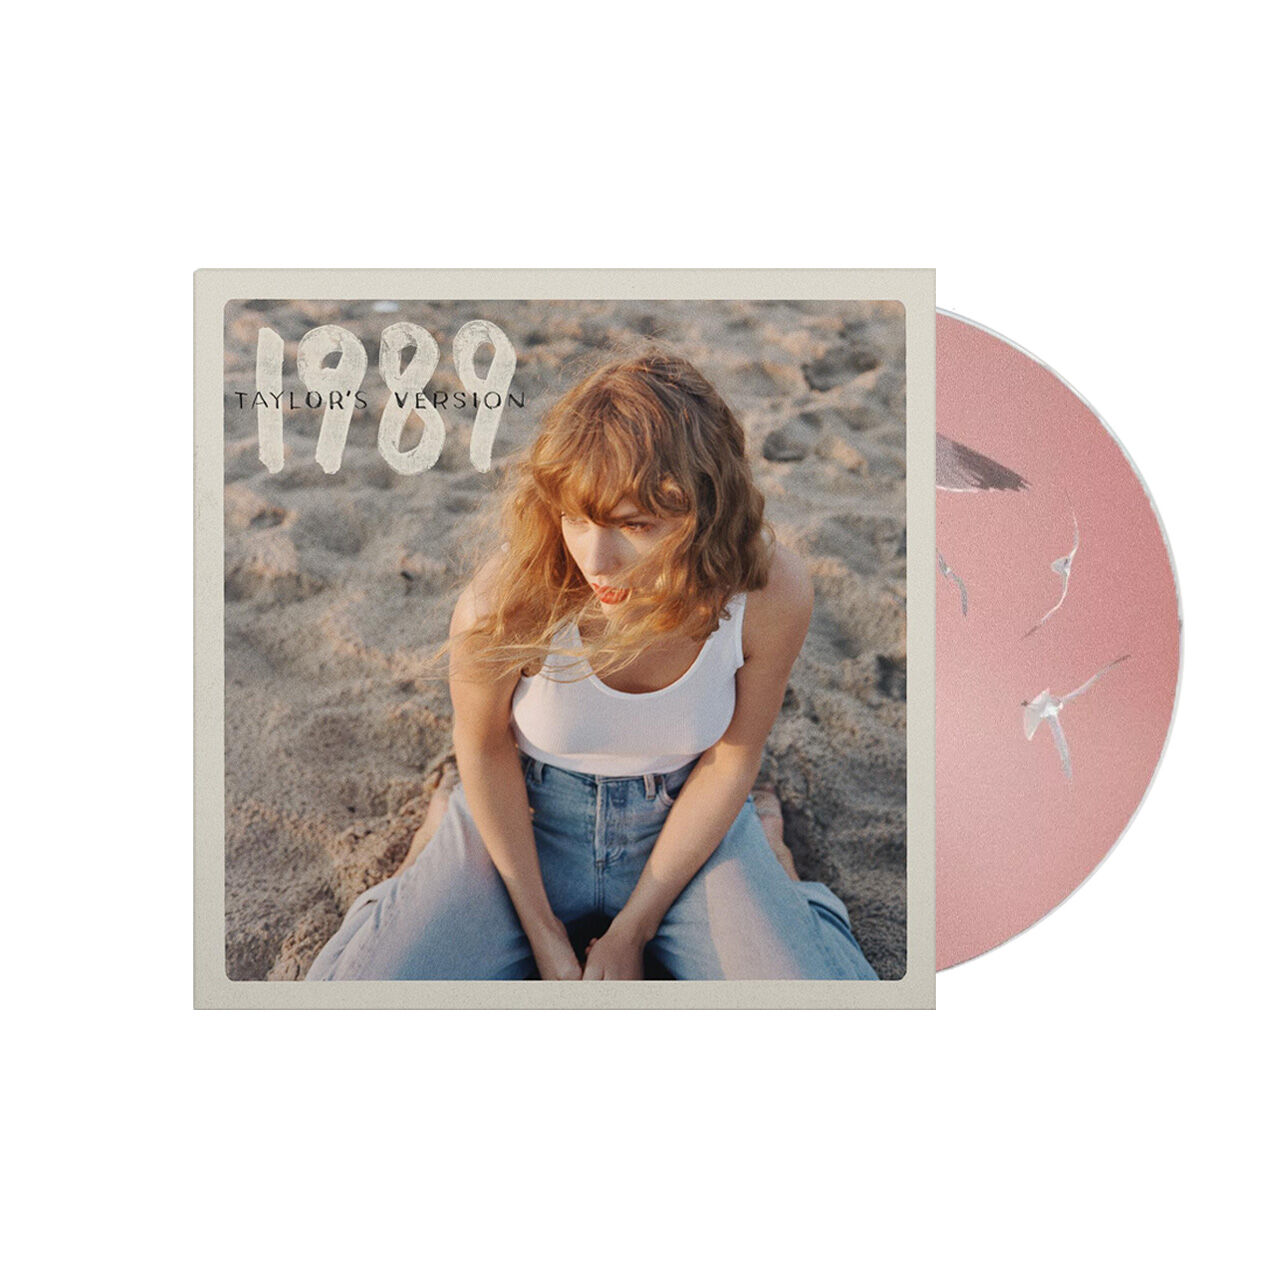 TAYLOR SWIFT 1989 (Taylor’s Version) Rose Garden Pink Deluxe Jewel Case CD, Case Dent